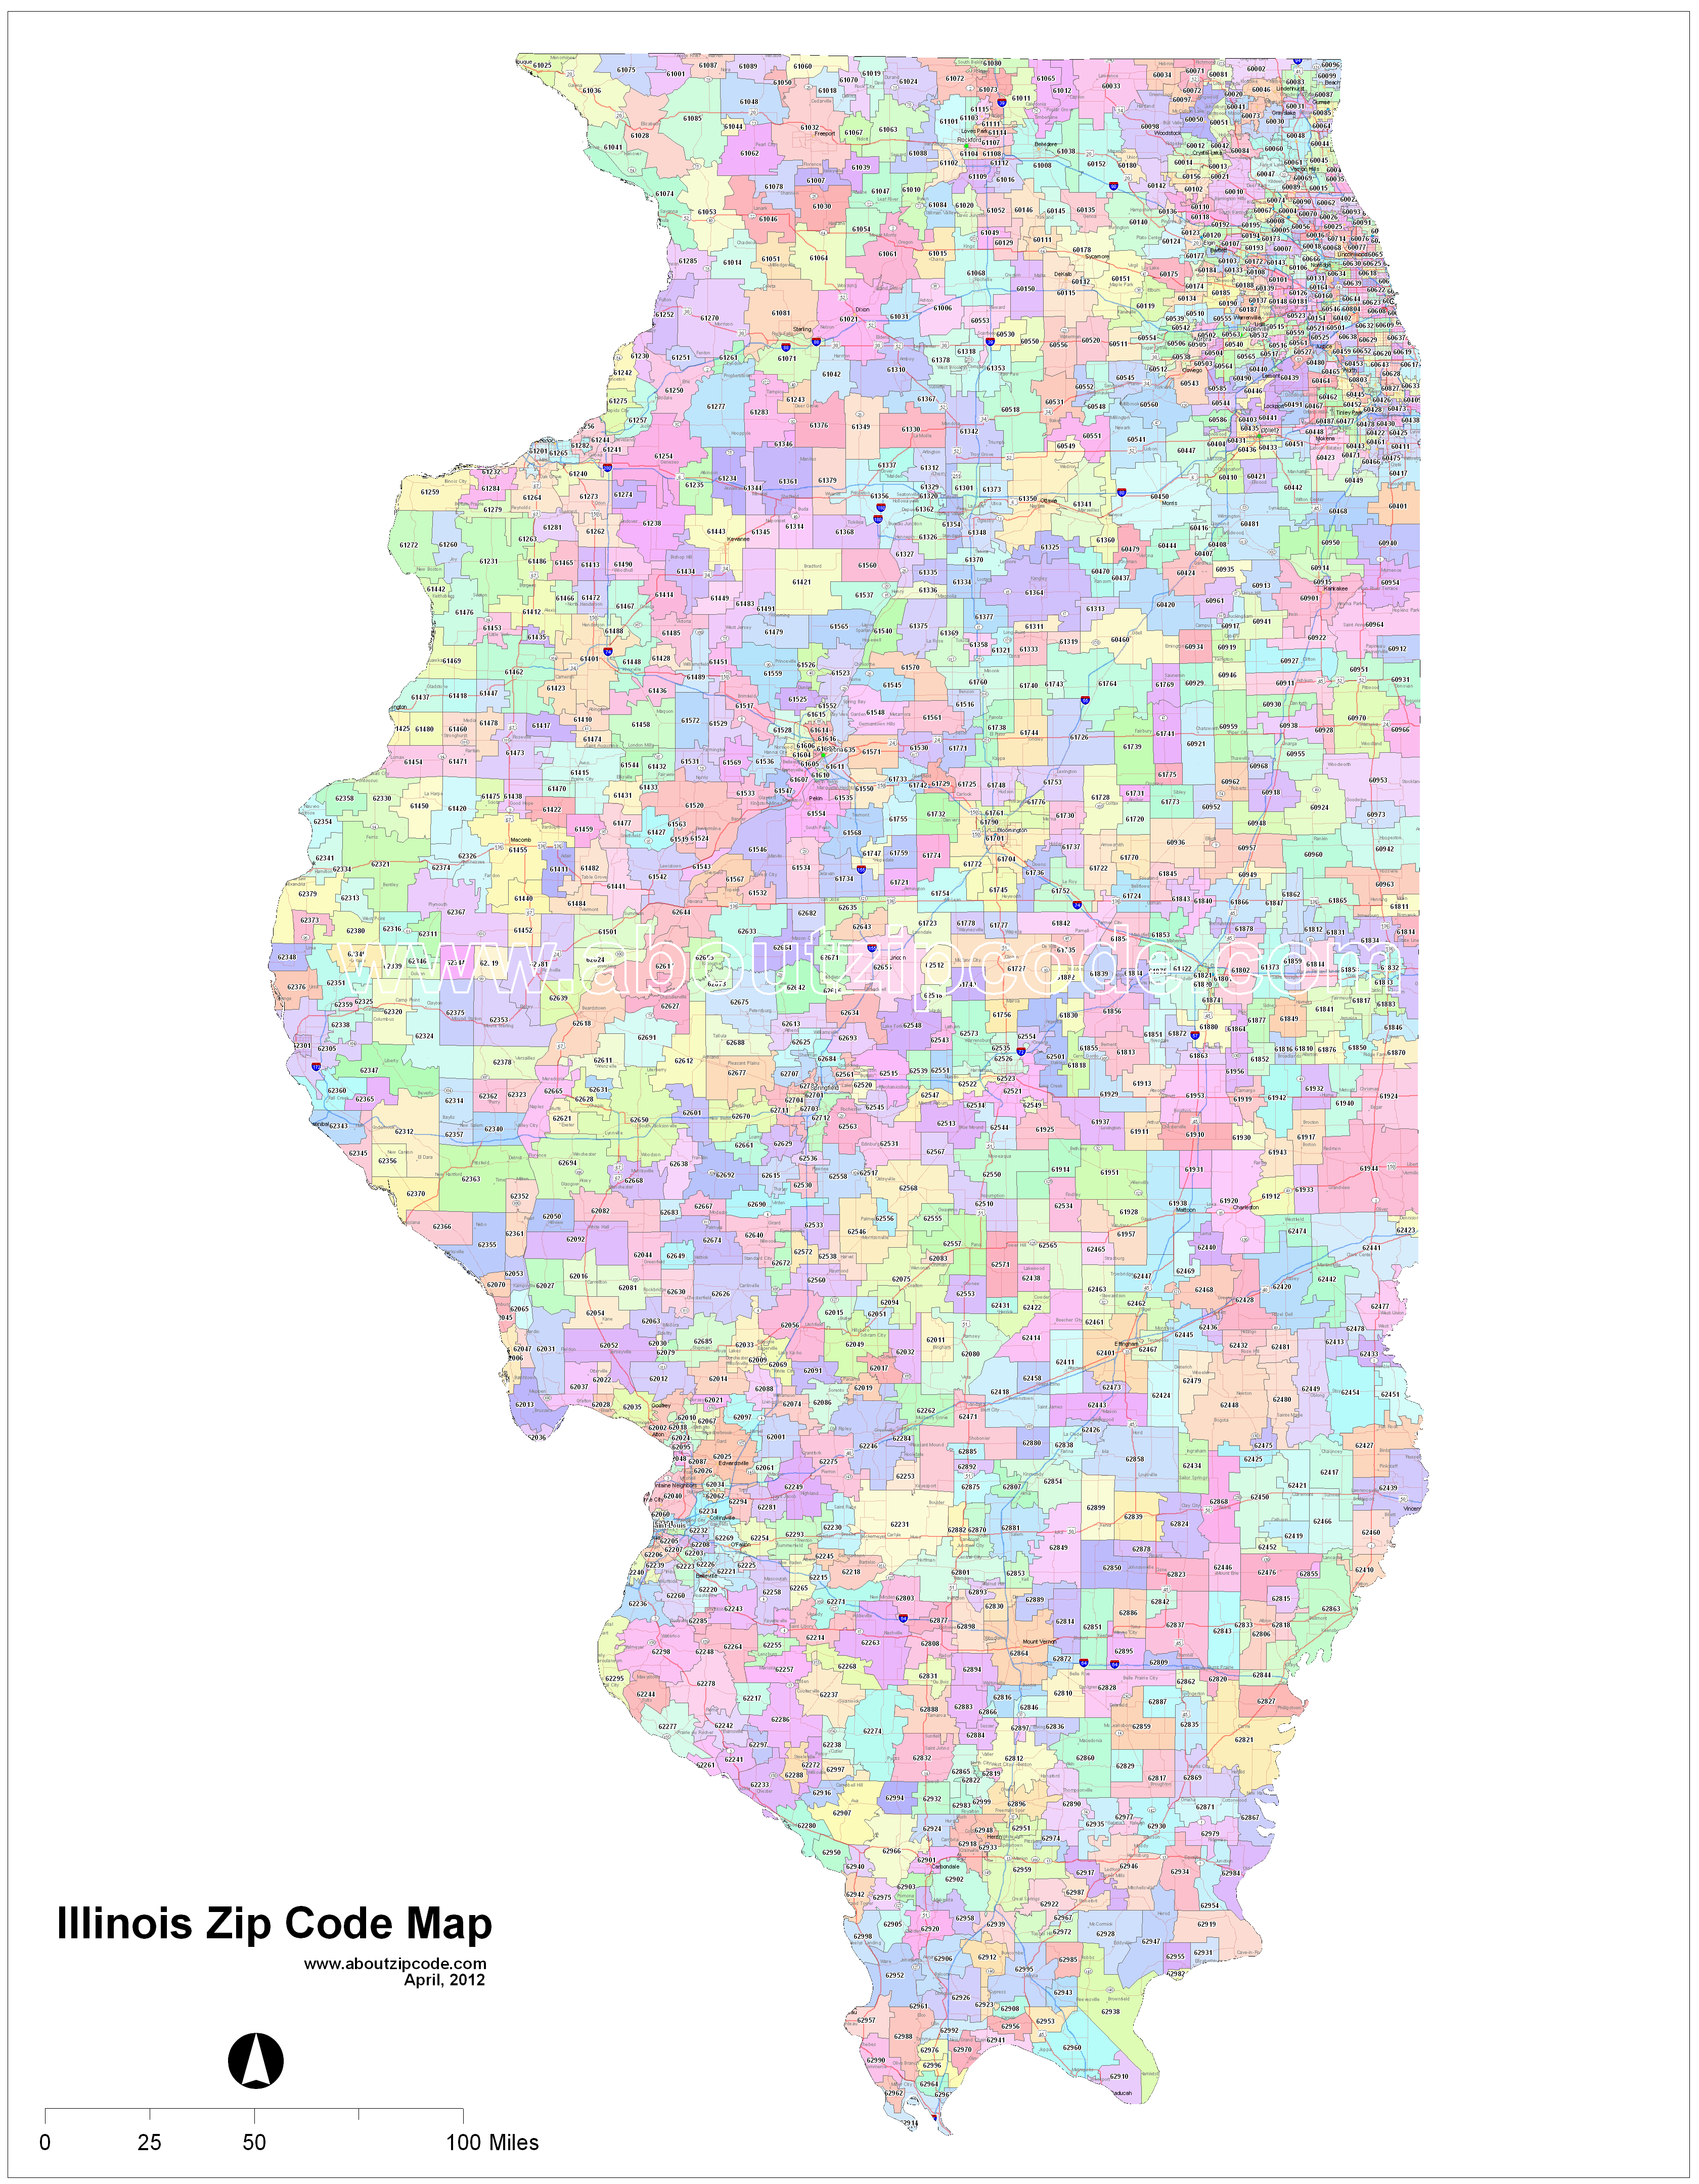 oswego il zip code map Illinois Zip Code Maps Free Illinois Zip Code Maps oswego il zip code map